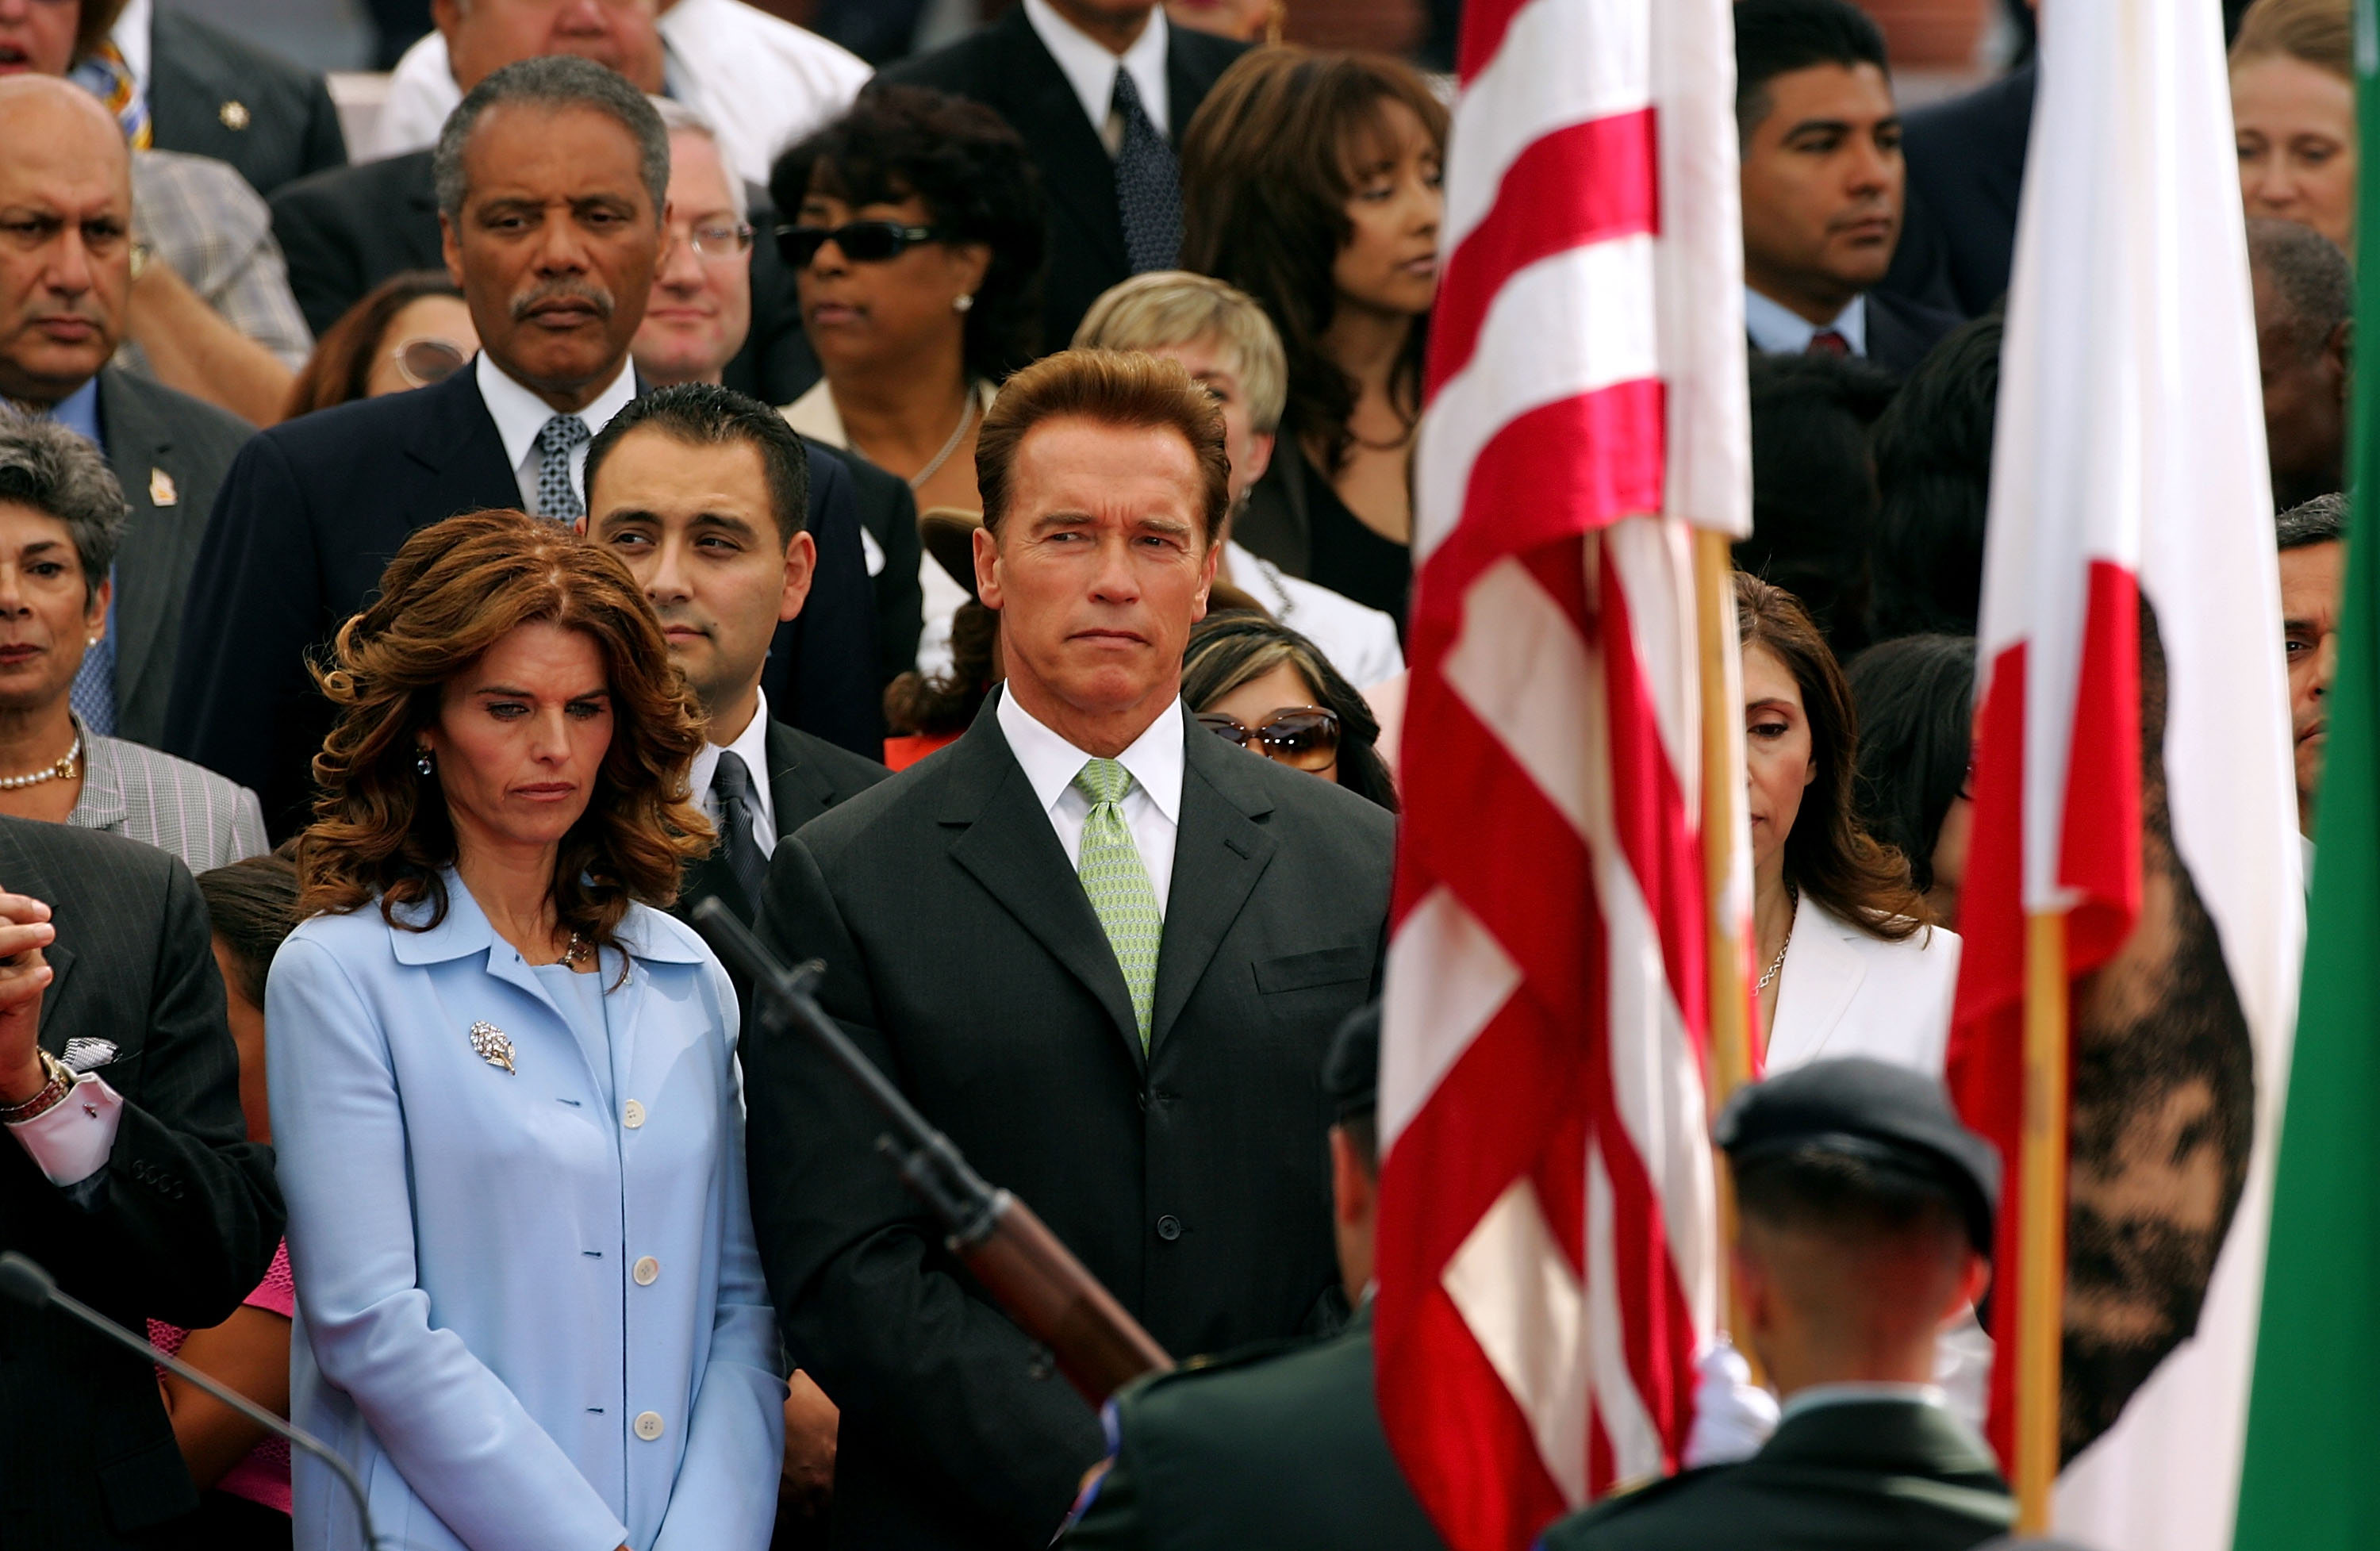 Maria Shriver and Arnold Schwarzenegger at Mayor Antonio Villaraigosa's inauguration in Los Angeles, 2005 | Source: Getty Images